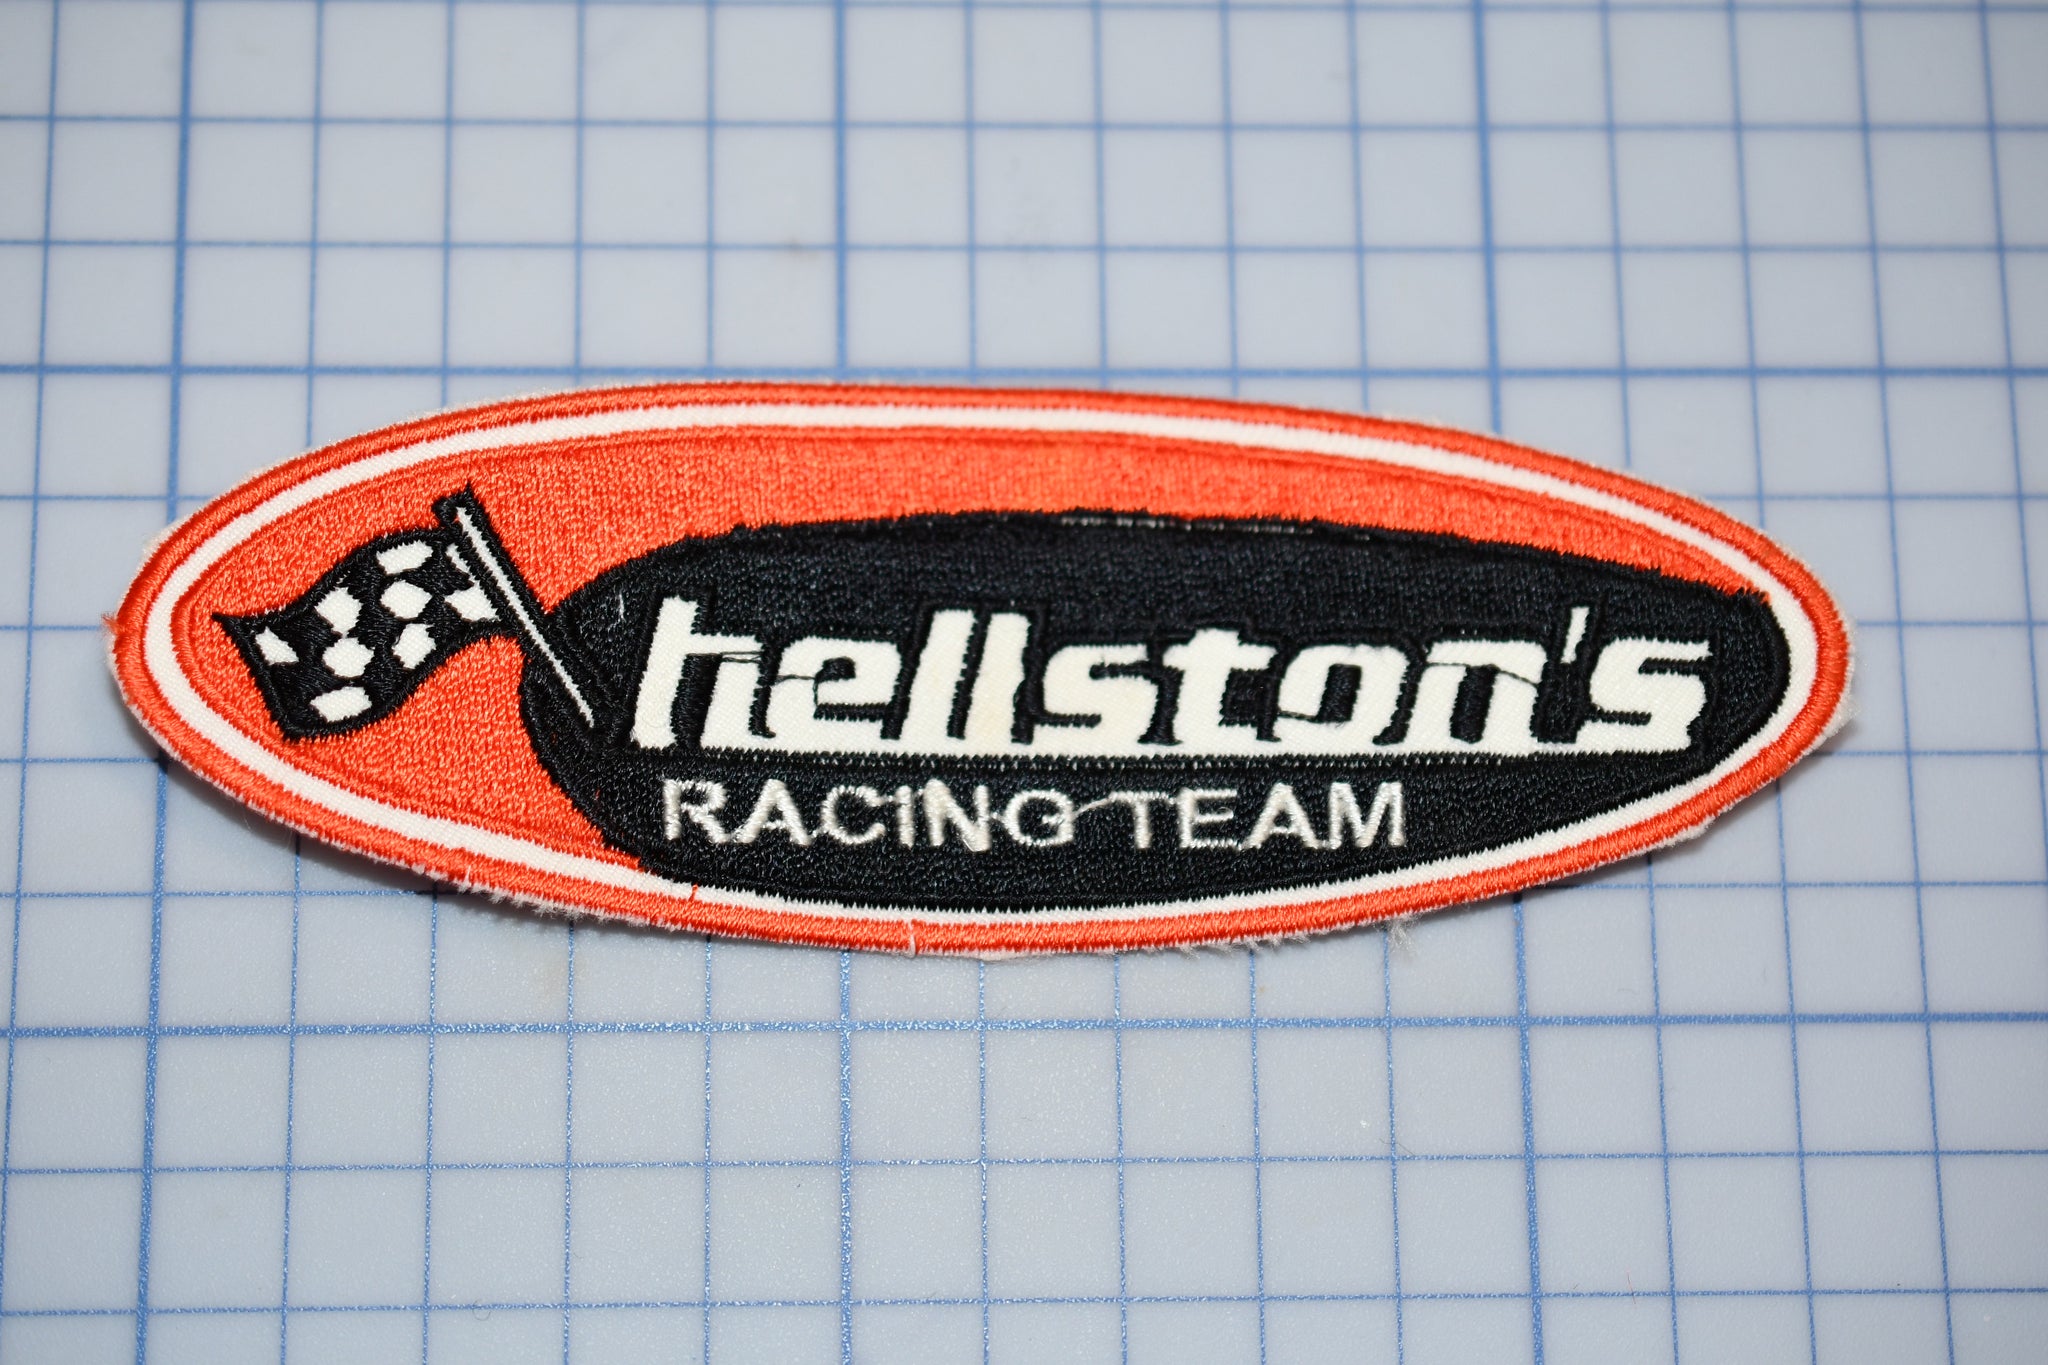 "hellston's Racing Team" Sew On Biker Patch (B30-365)